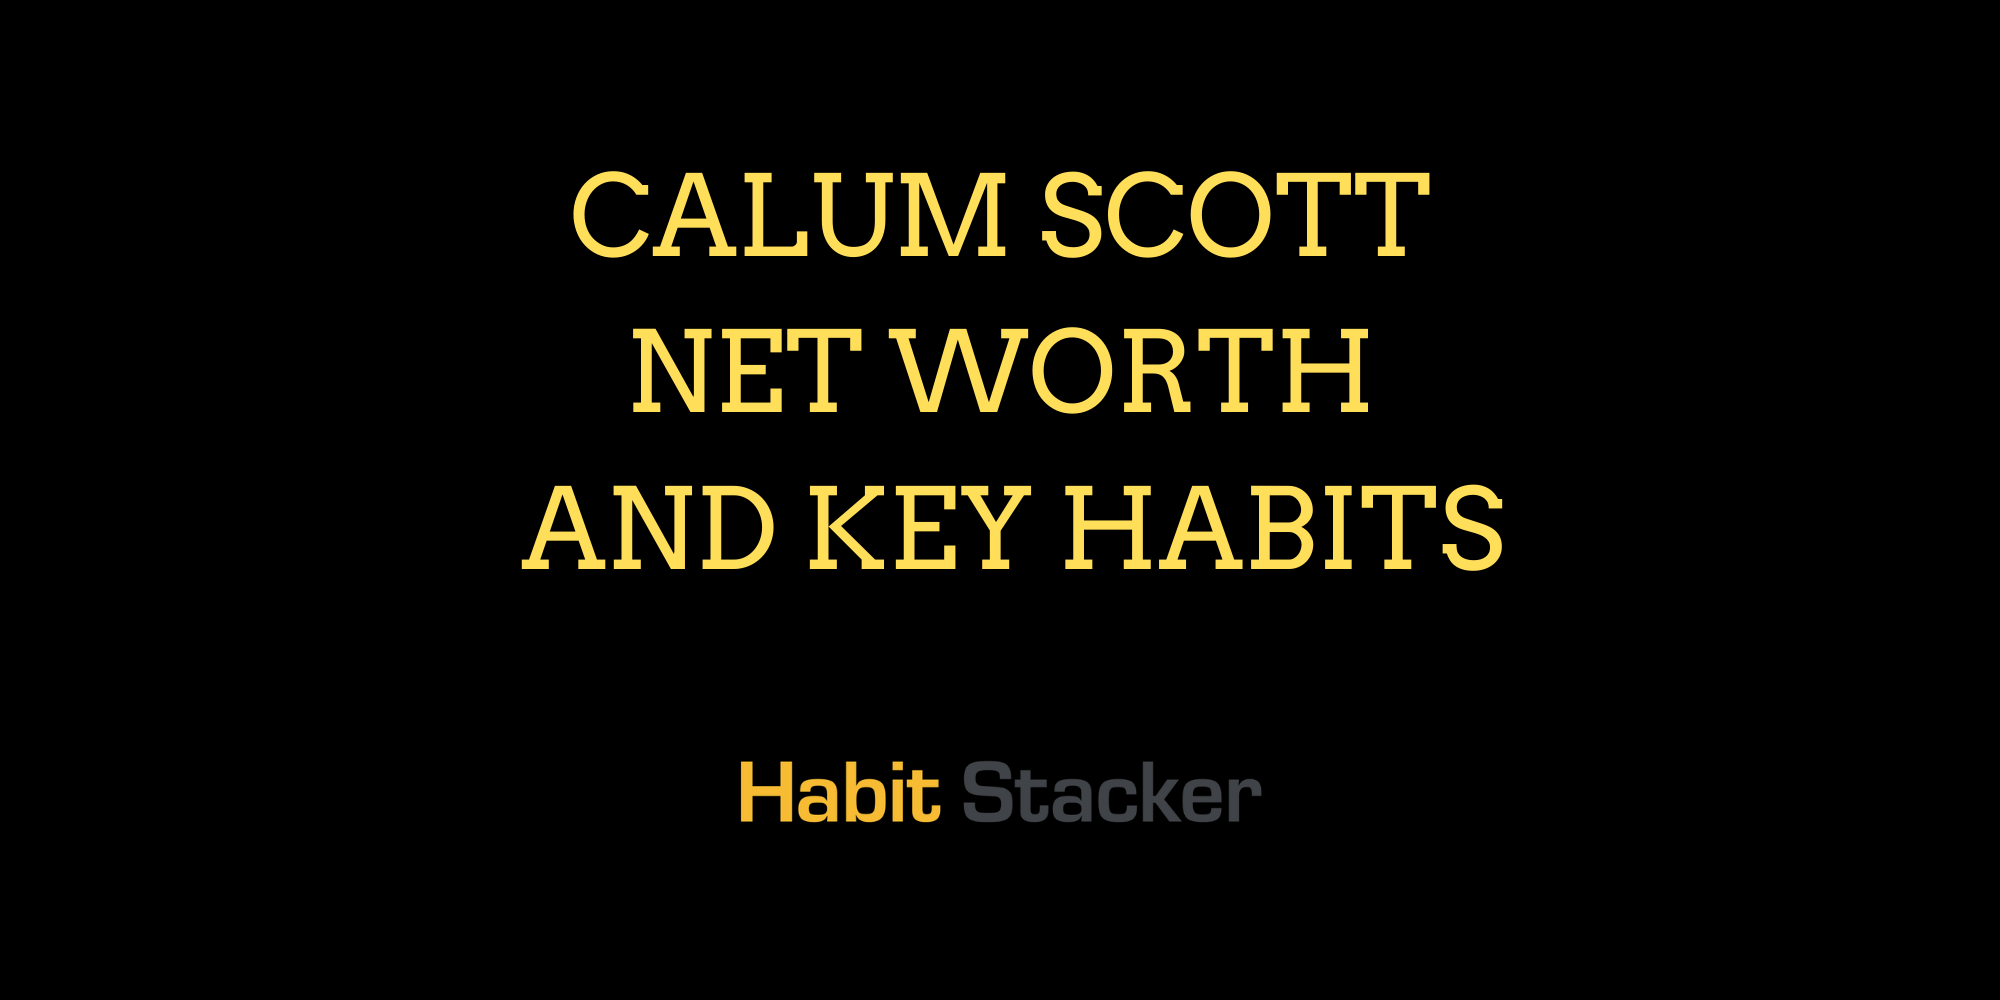 Calum Scott Net Worth and Key Habits